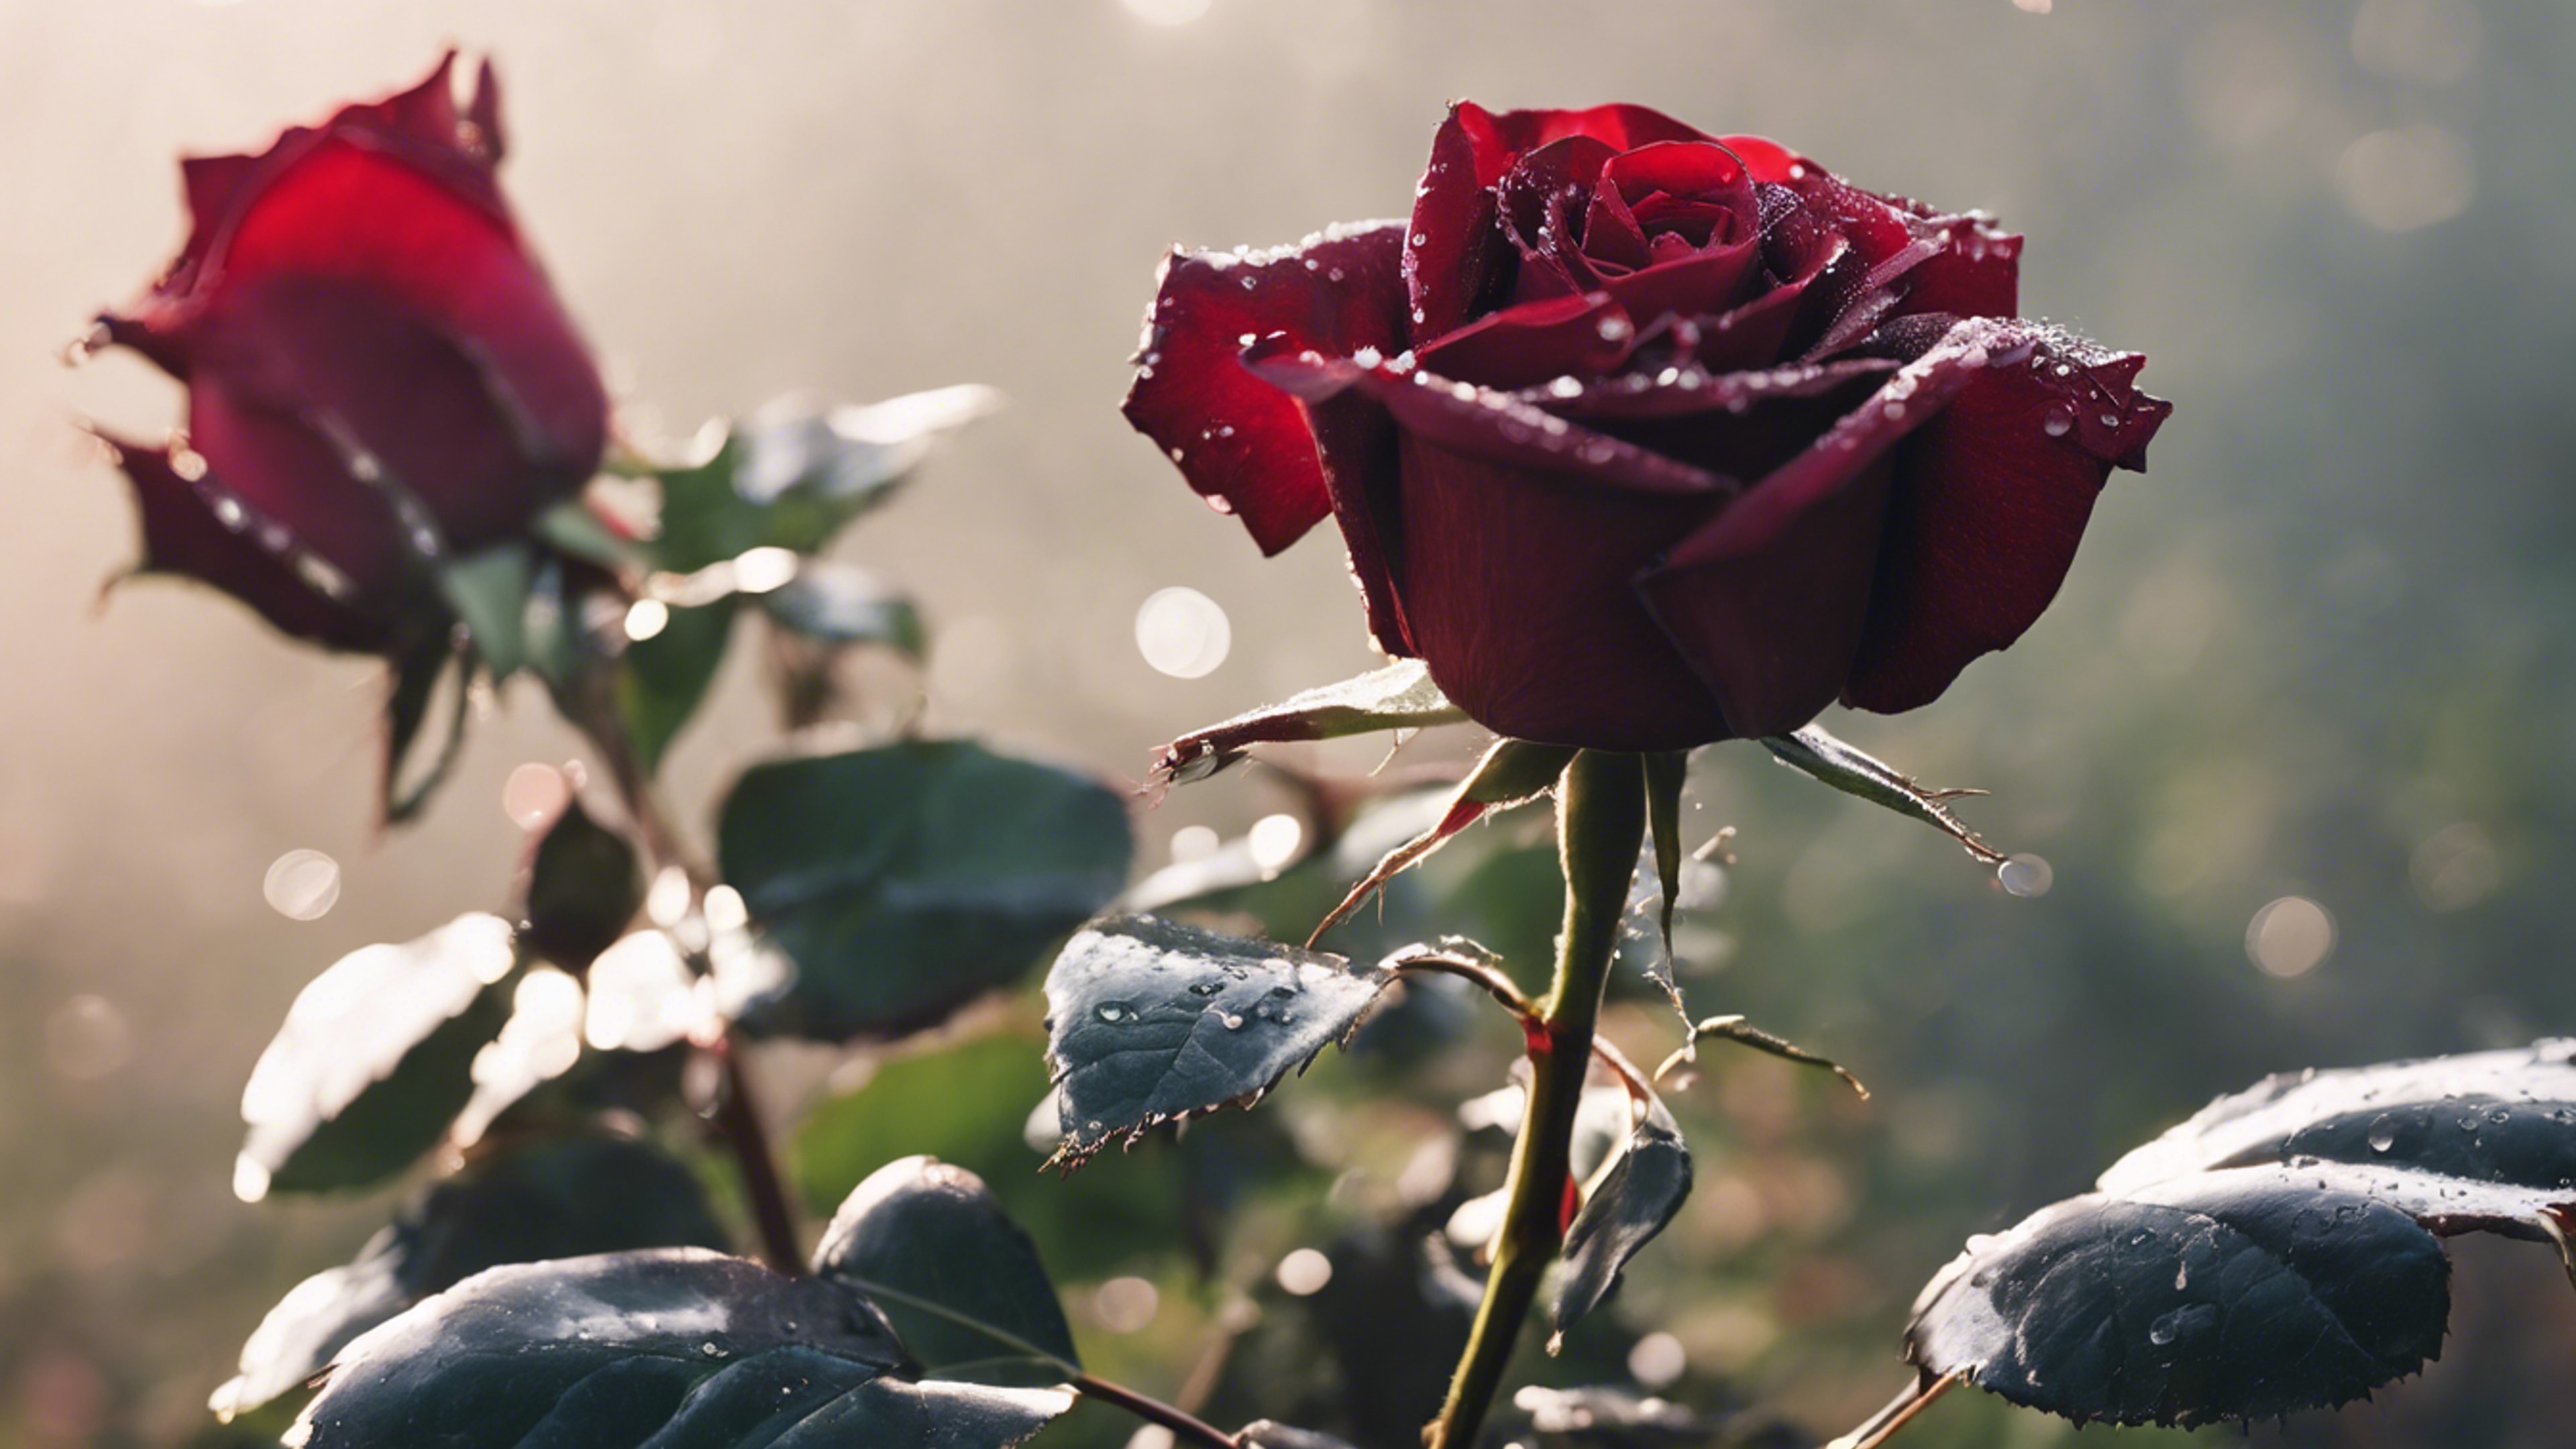 A lush dark red rose in full bloom, glistening with morning dew. ផ្ទាំង​រូបភាព[3308270db75d4dd78aa2]